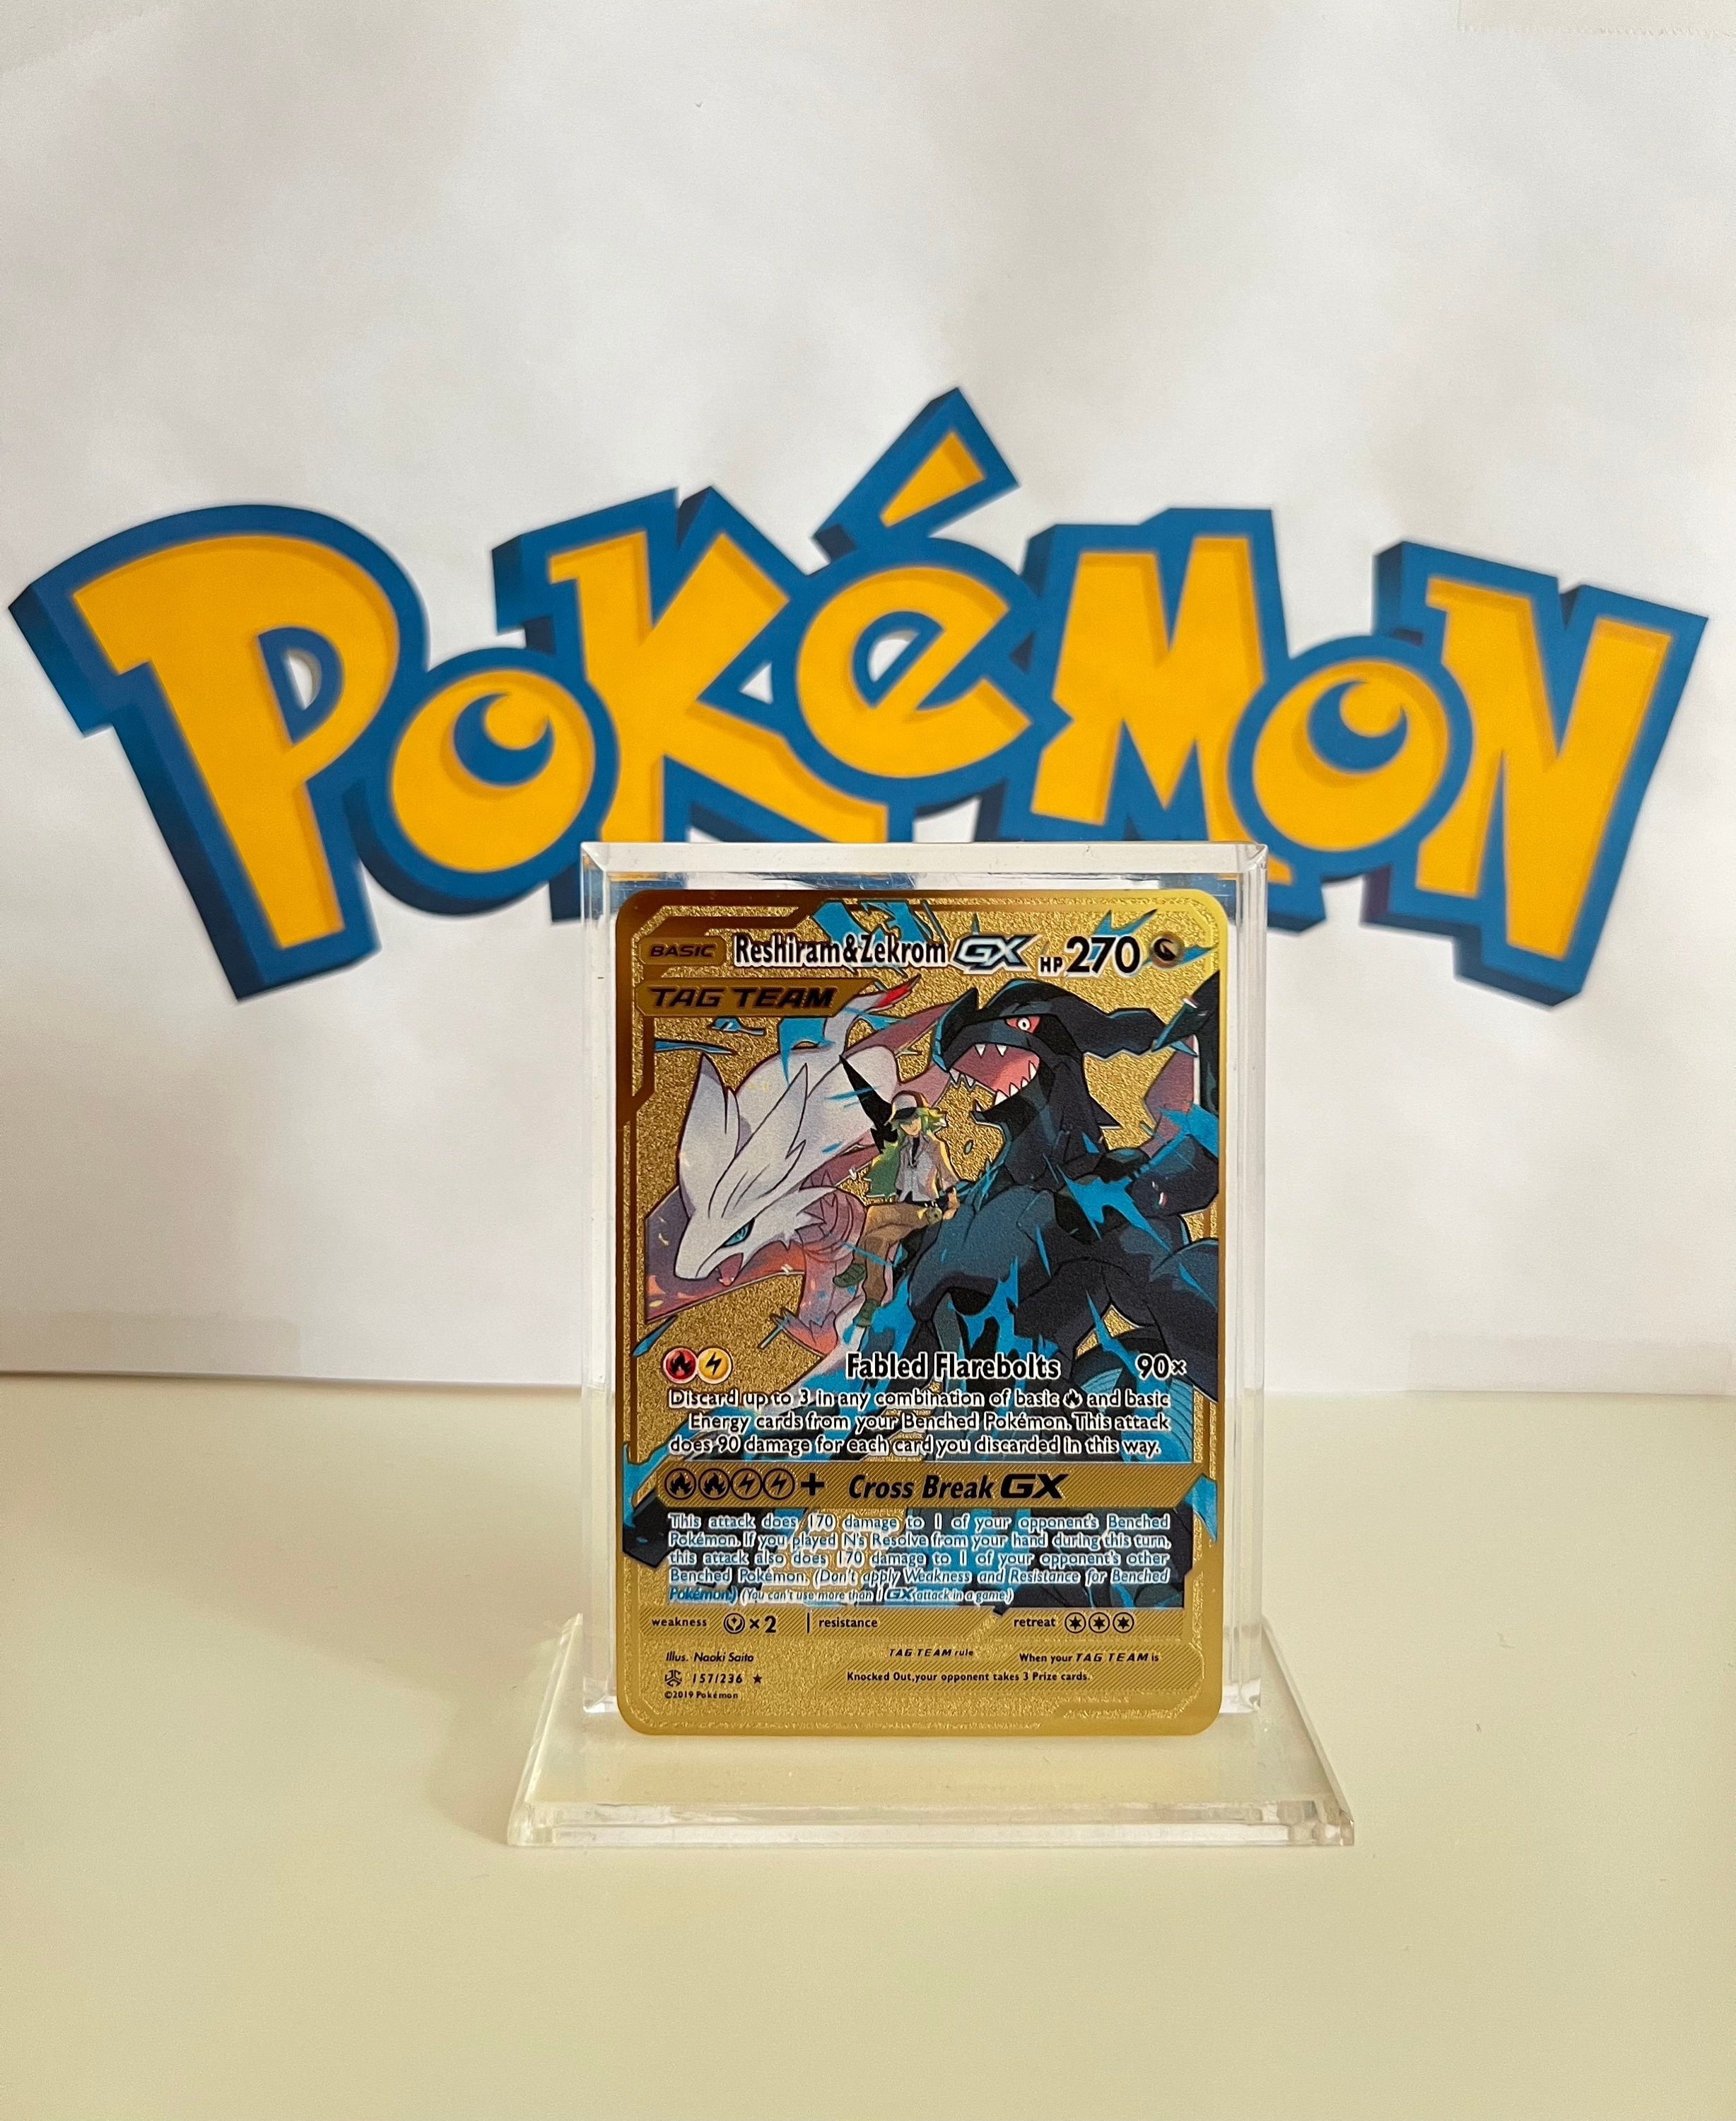 Carta Pokémon Lançamento Reshiram & Zekrom Gx 157/236 Portug